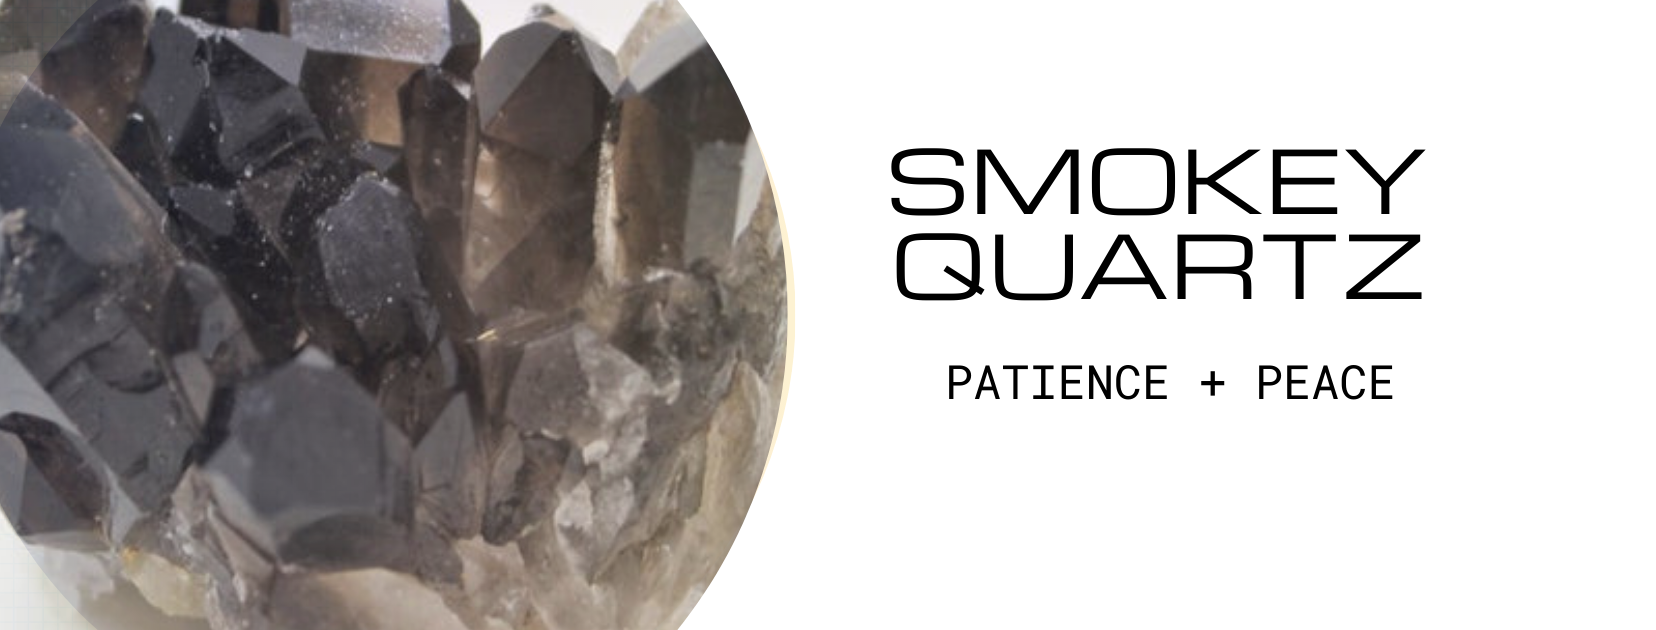 Smokey Quartz Healing Properties | Smokey Quartz Meaning | Benefits Of Smokey Quartz - Magic Crystals